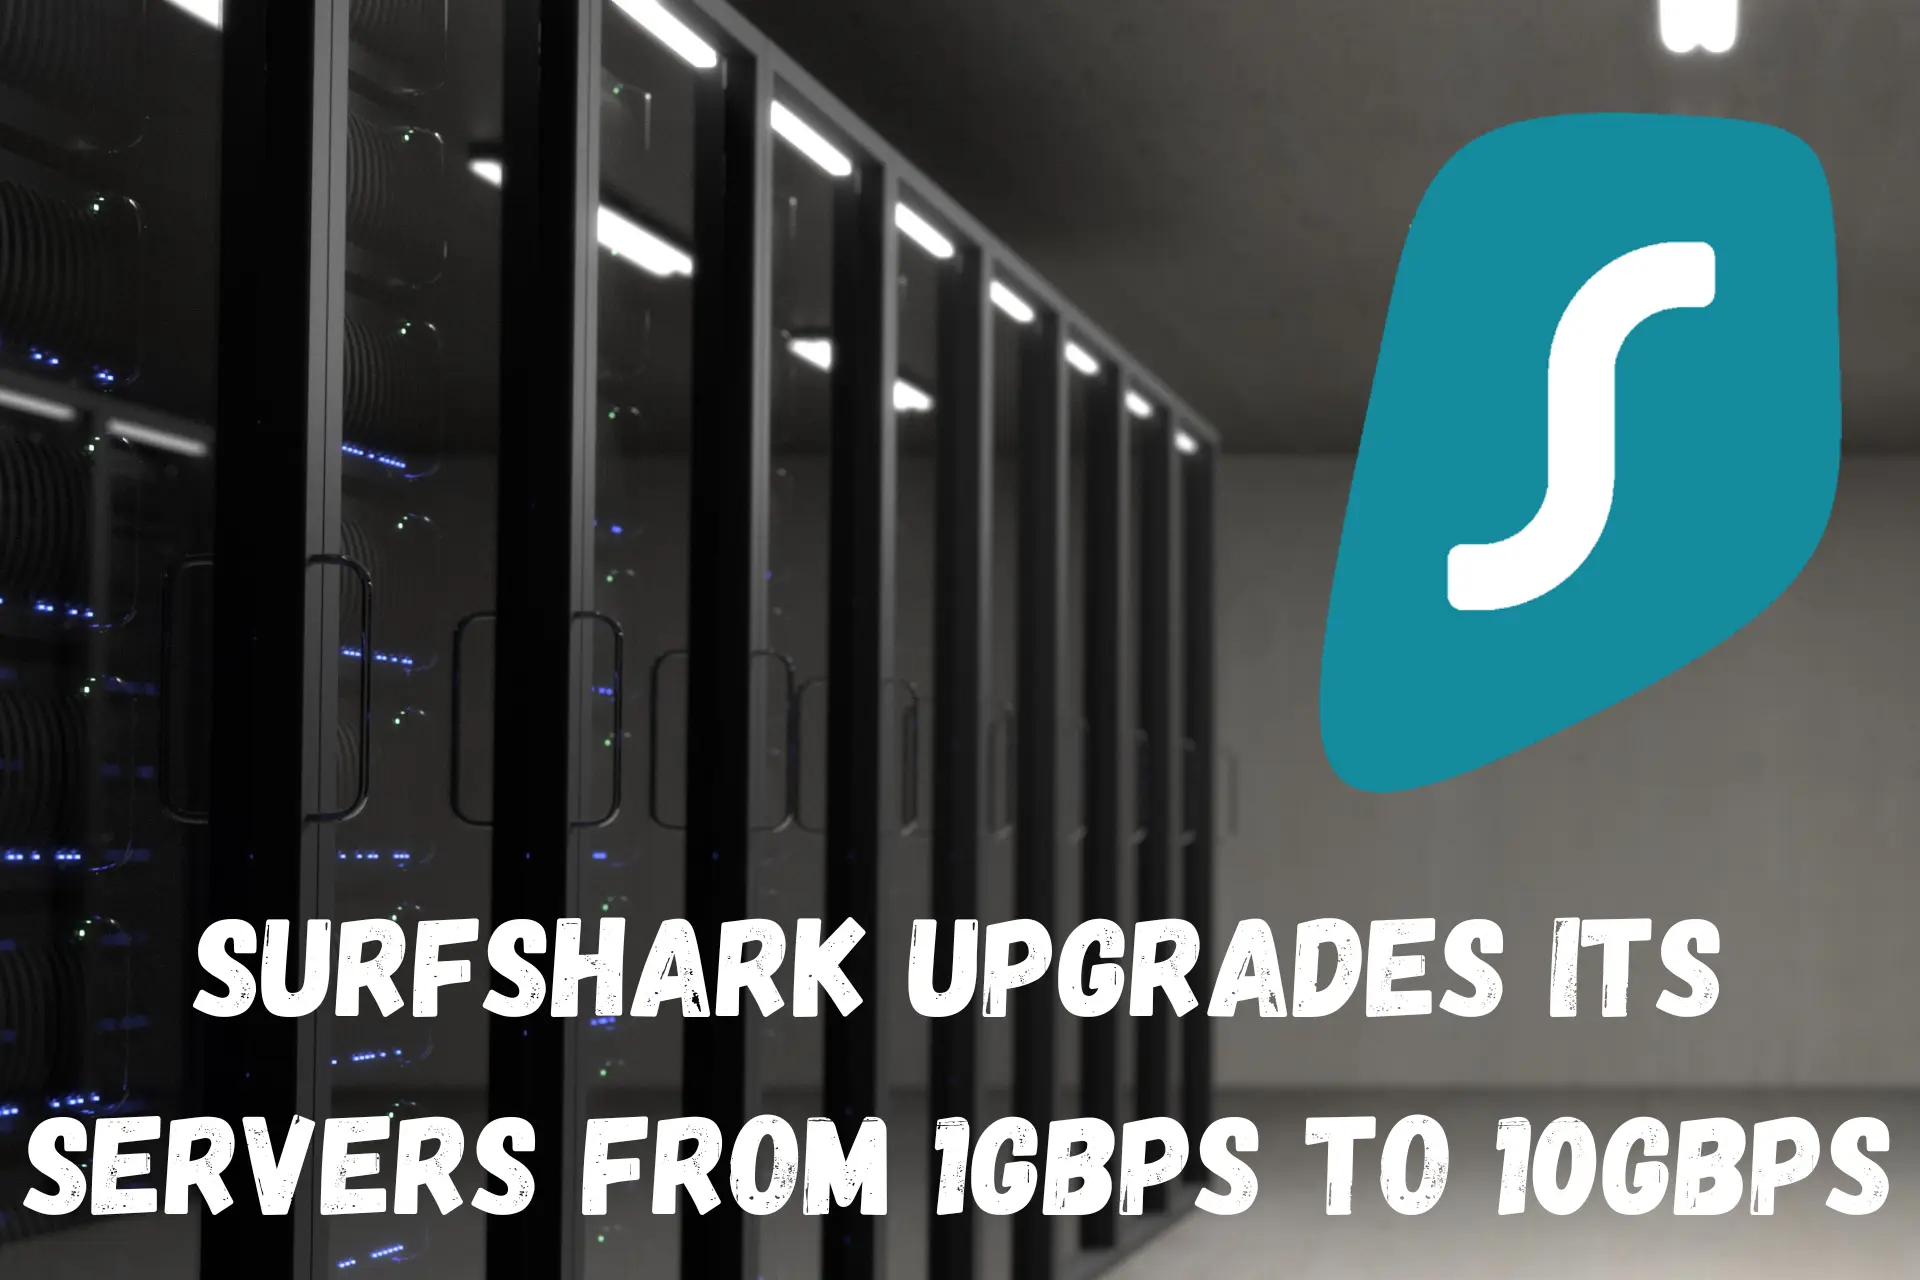 Surfshark servers upgrade